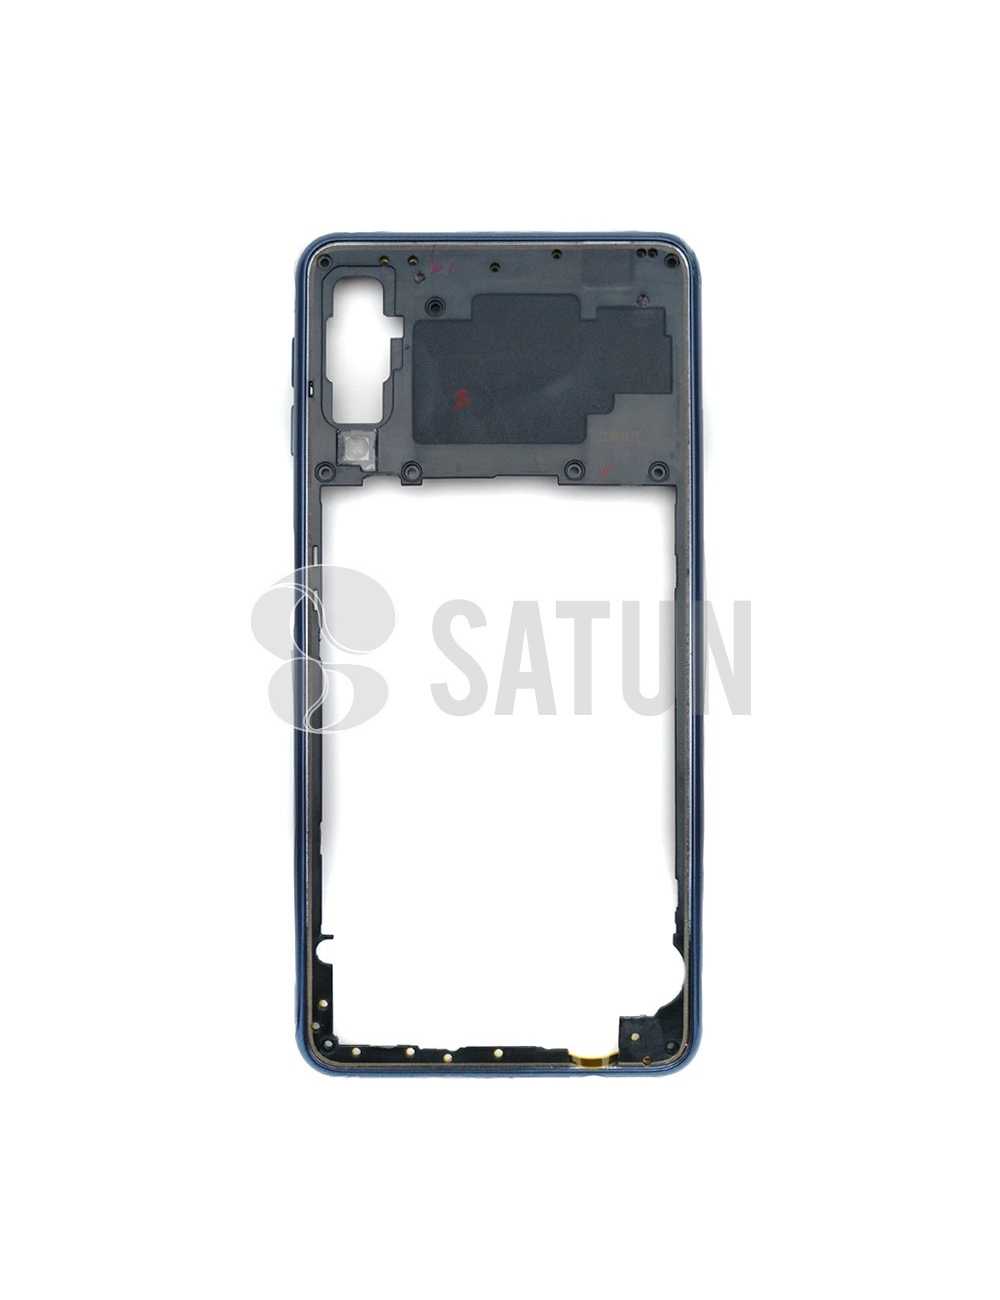 Carcasa intermedia Samsung Galaxy A7 2018 negro